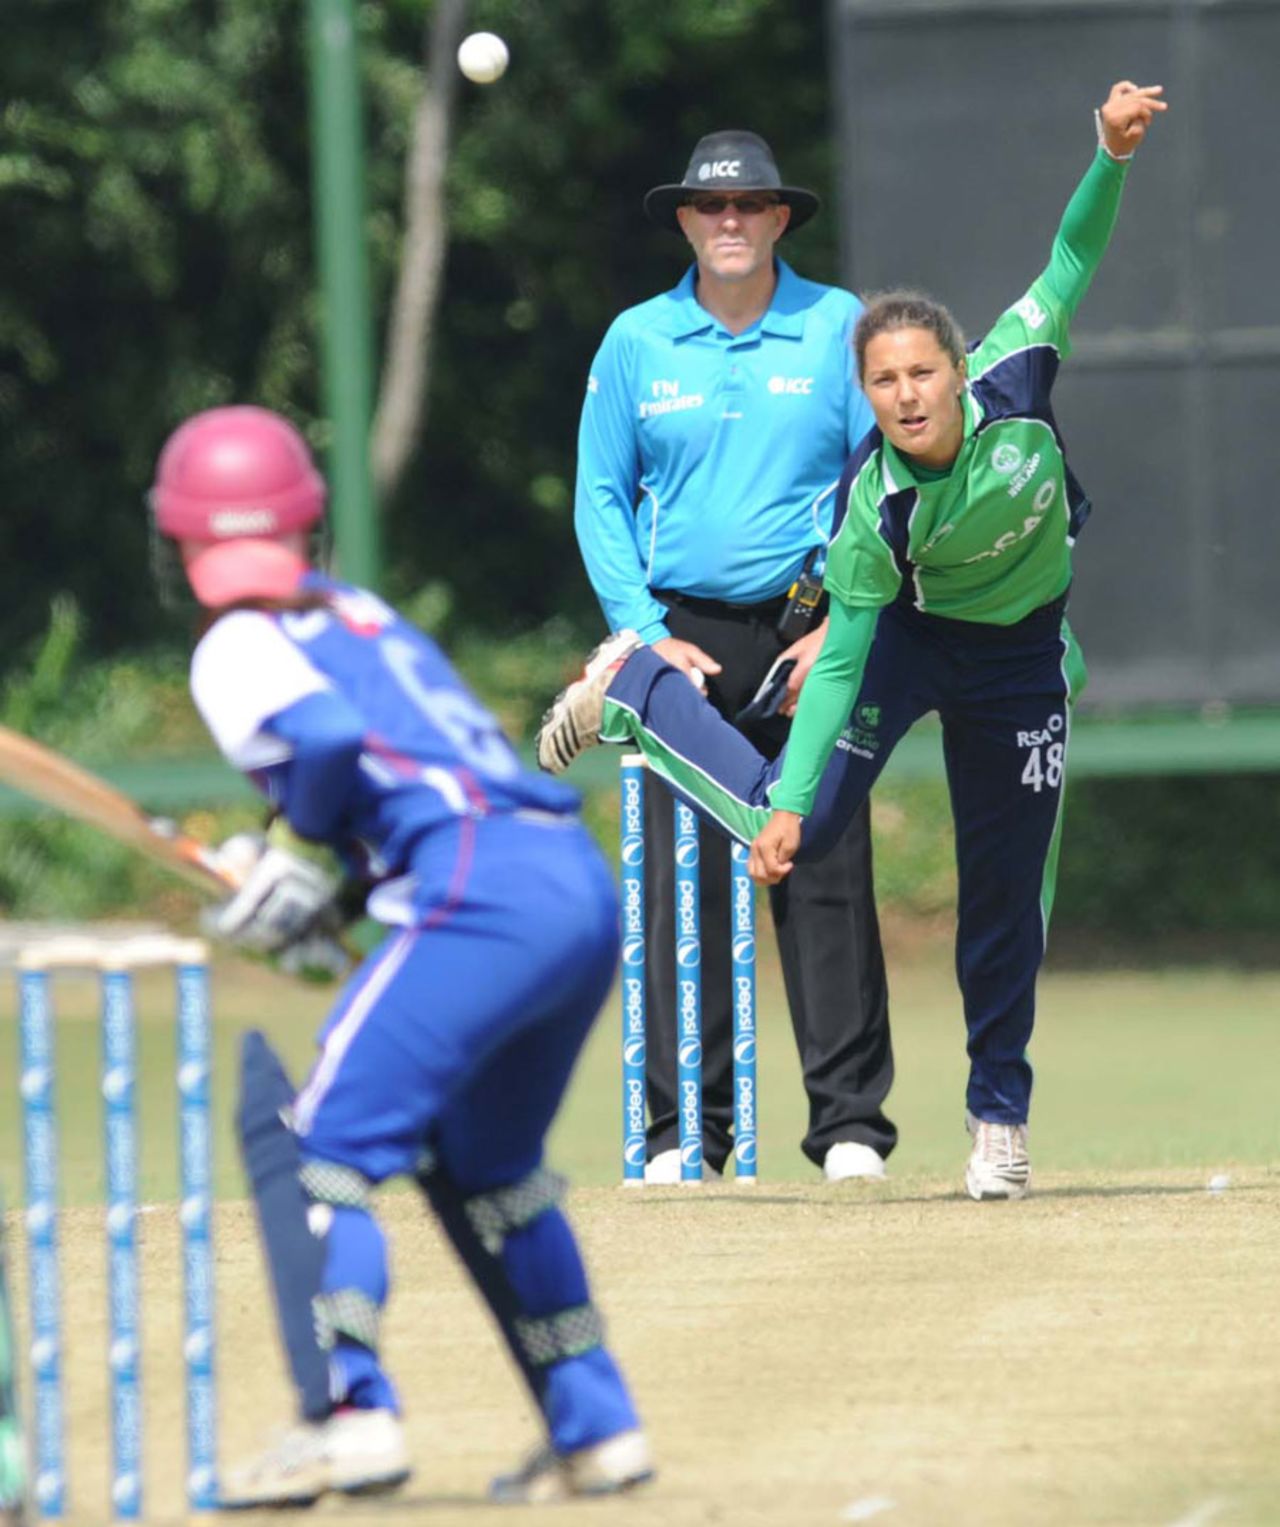 Elena Tice picked up three wickets for 10 runs, Ireland Women v Japan Women, ICC Women's World T20 qualifiers, Group B, Dublin, July 2013